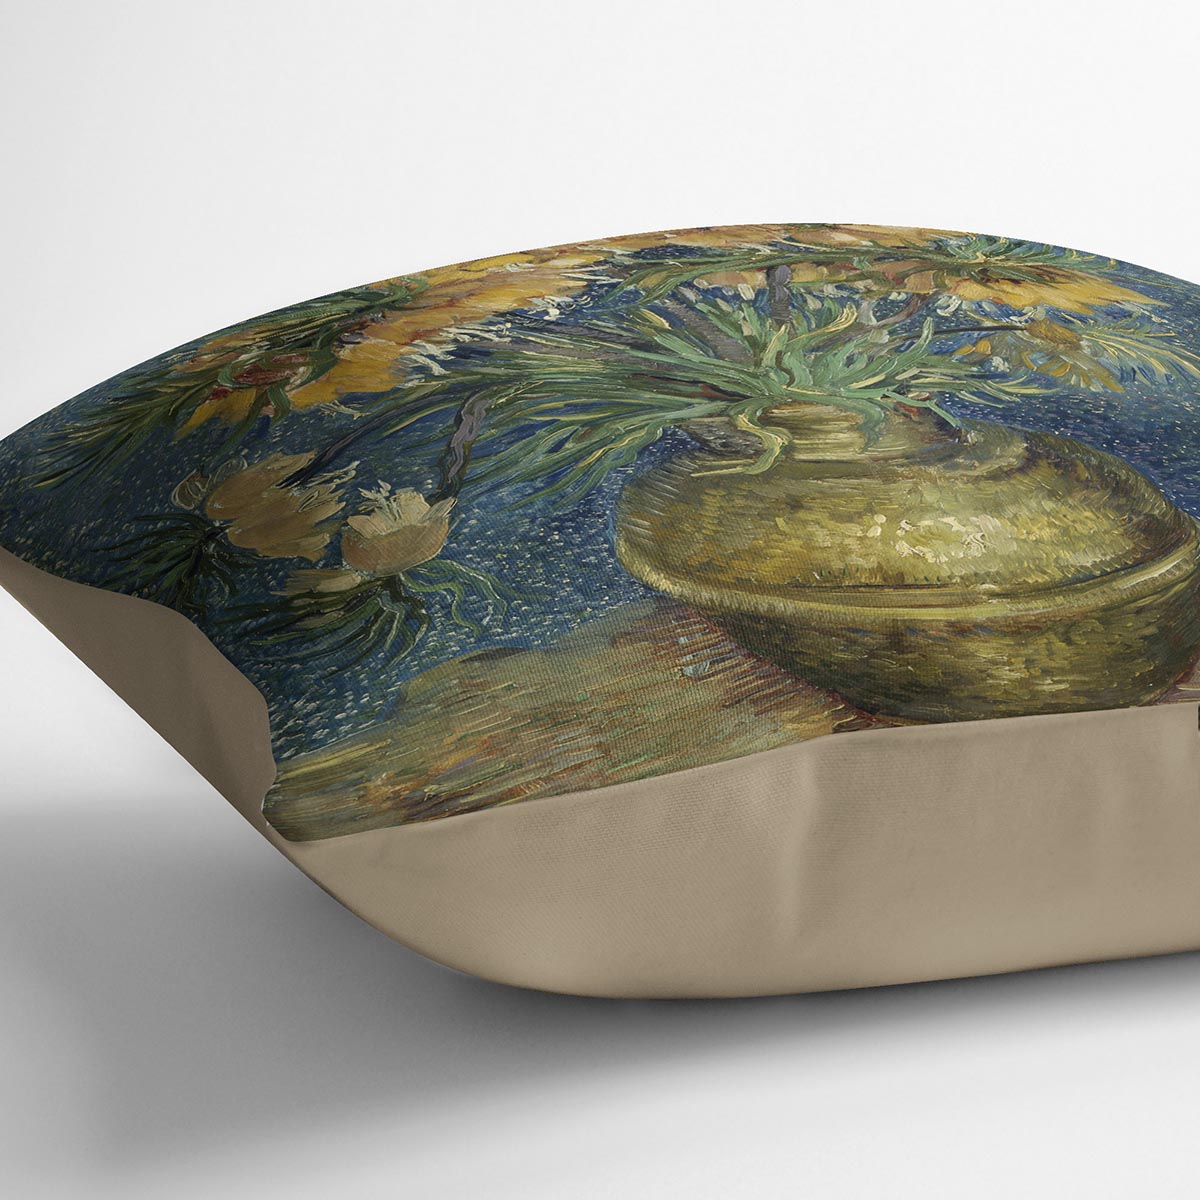 Van Gogh Fritillaries in a Copper Vase Cushion